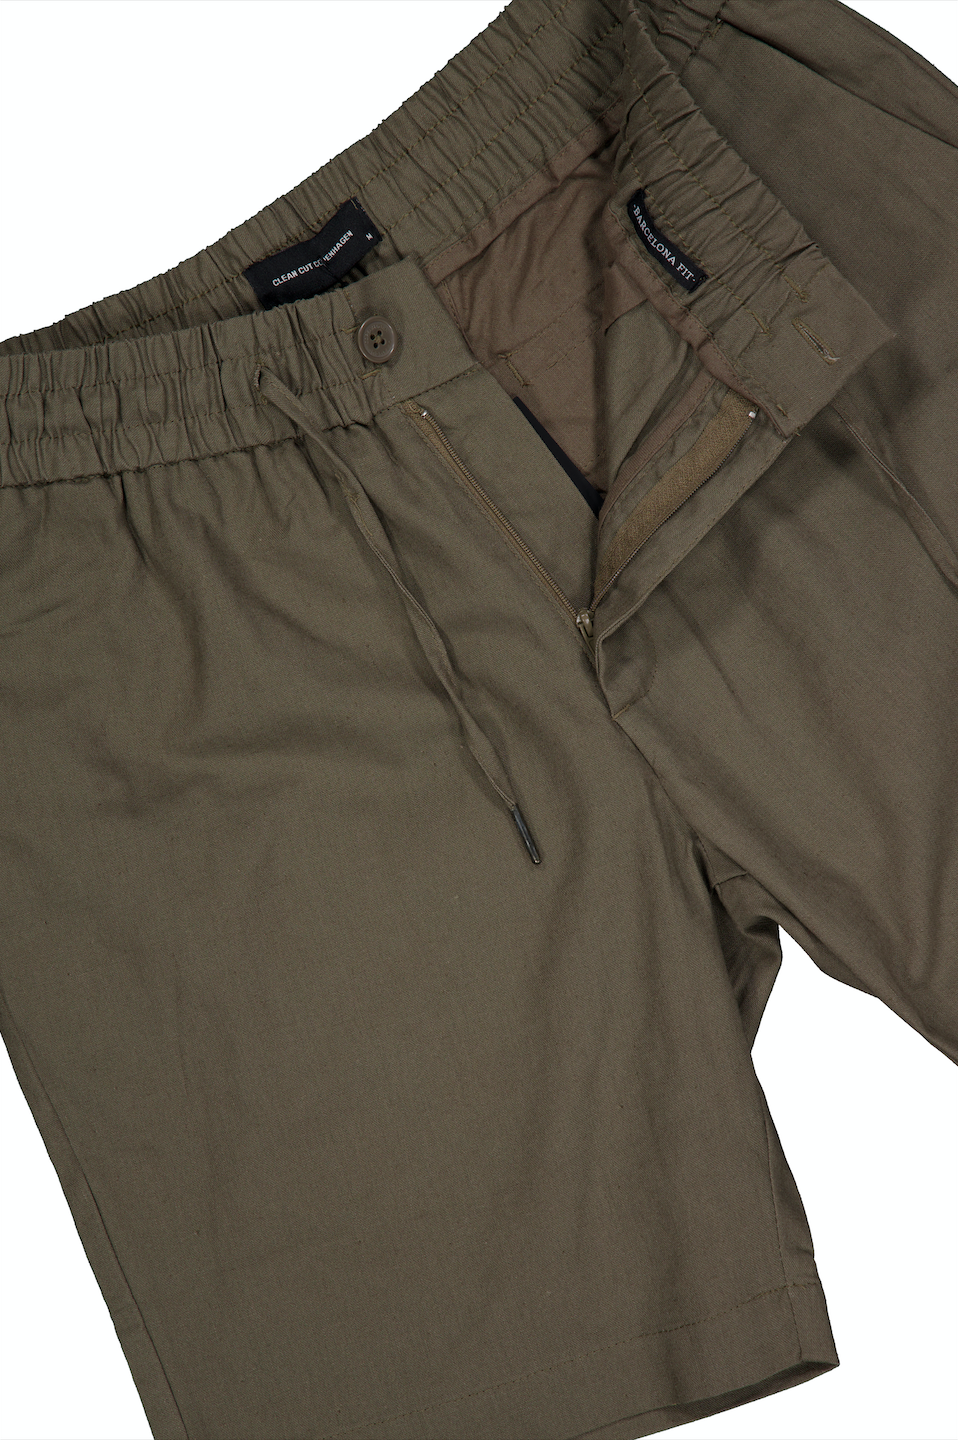 Barcelona Cotton/Linen Shorts Dusty Green